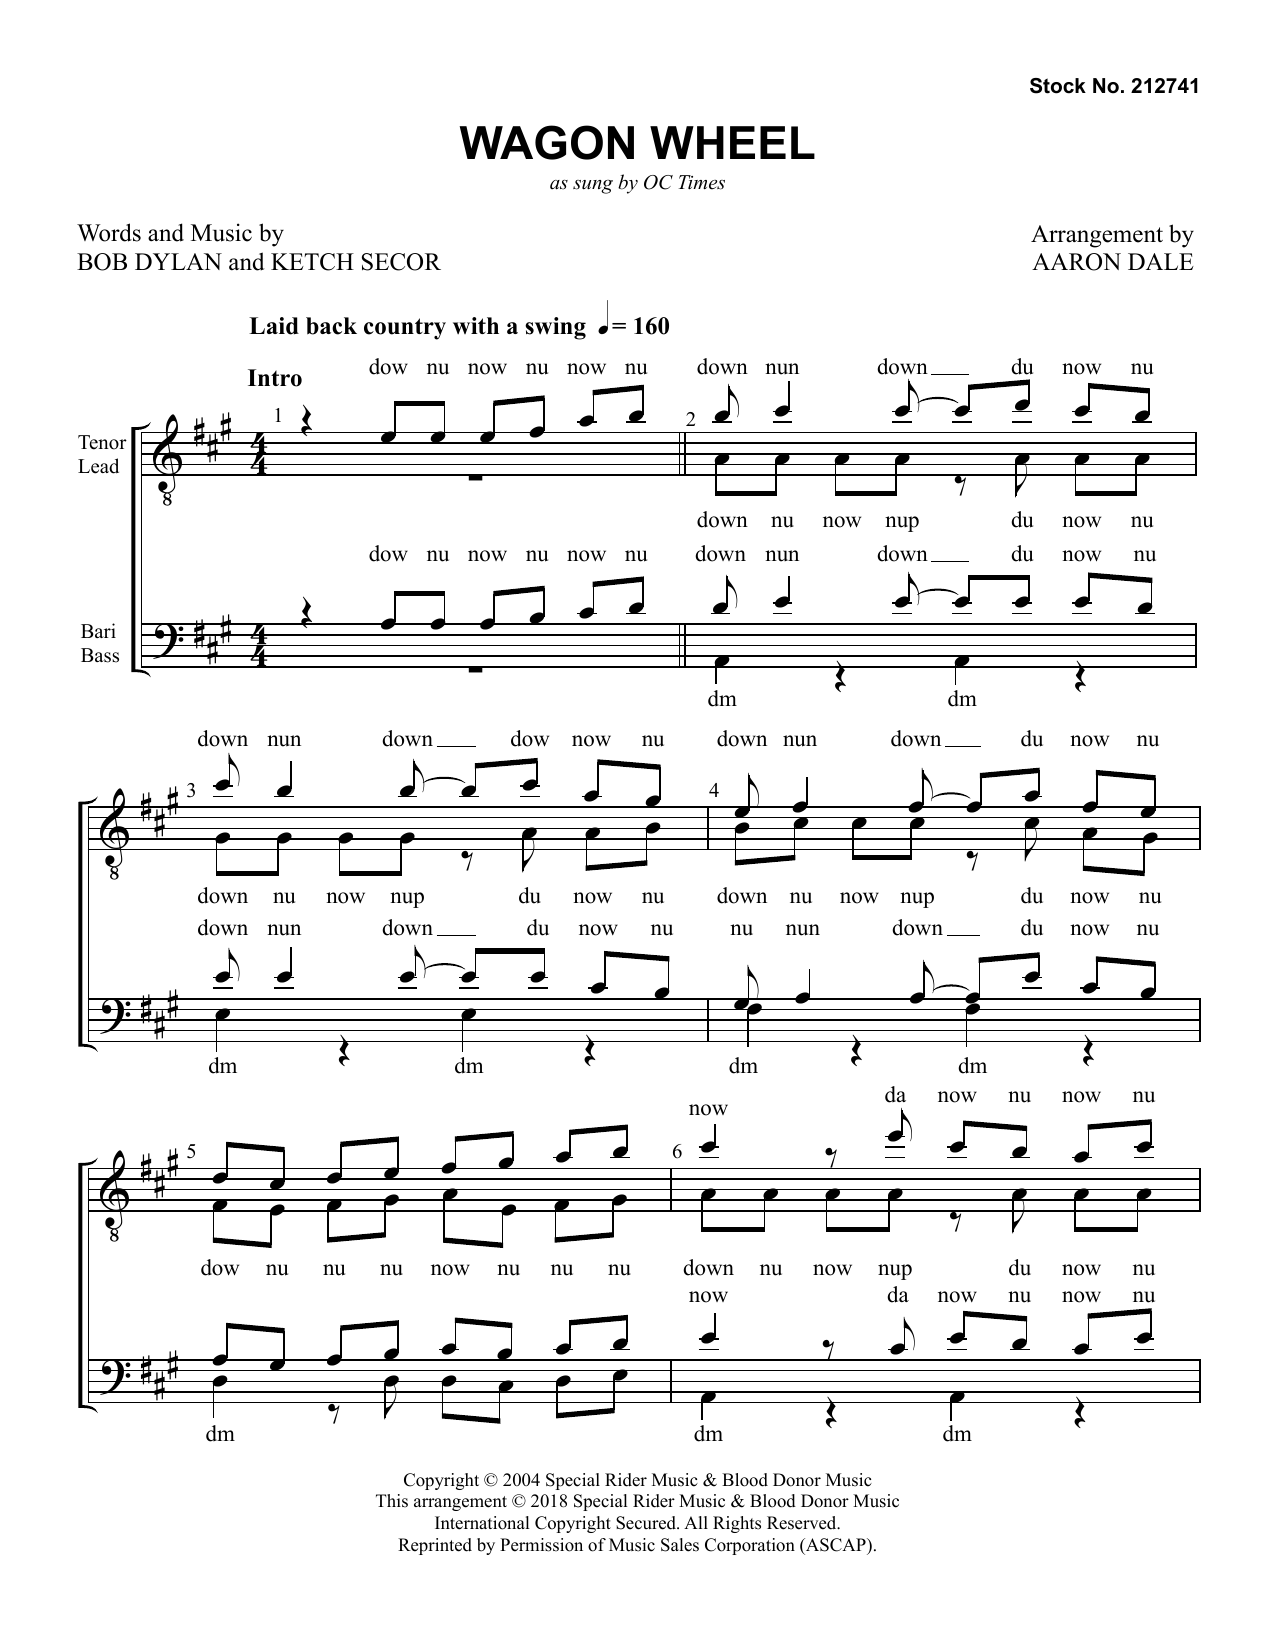 OC Times Wagon Wheel (arr. Aaron Dale) Sheet Music Notes & Chords for TTBB Choir - Download or Print PDF